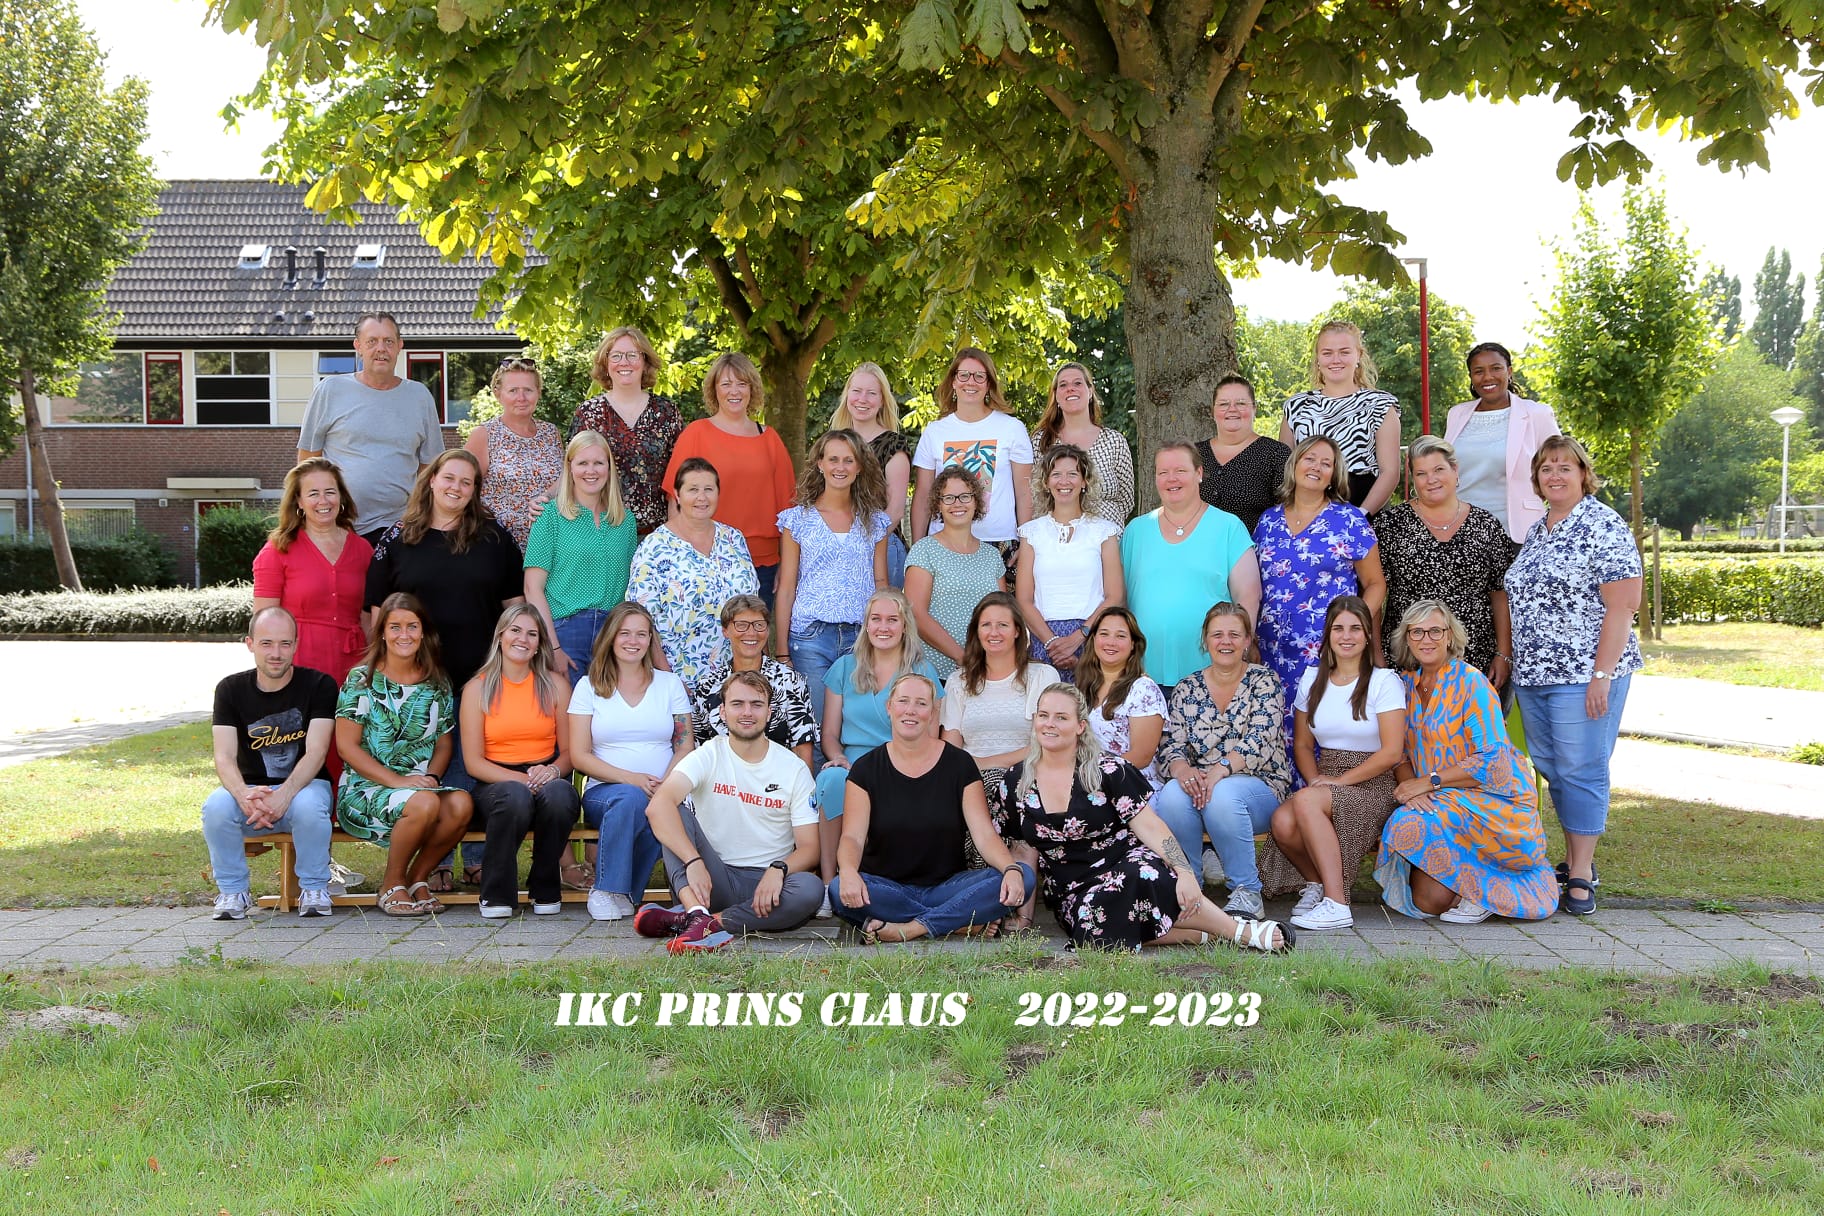 Team IKC Prins Claus – Unicoz Zoetermeer 2022-2023